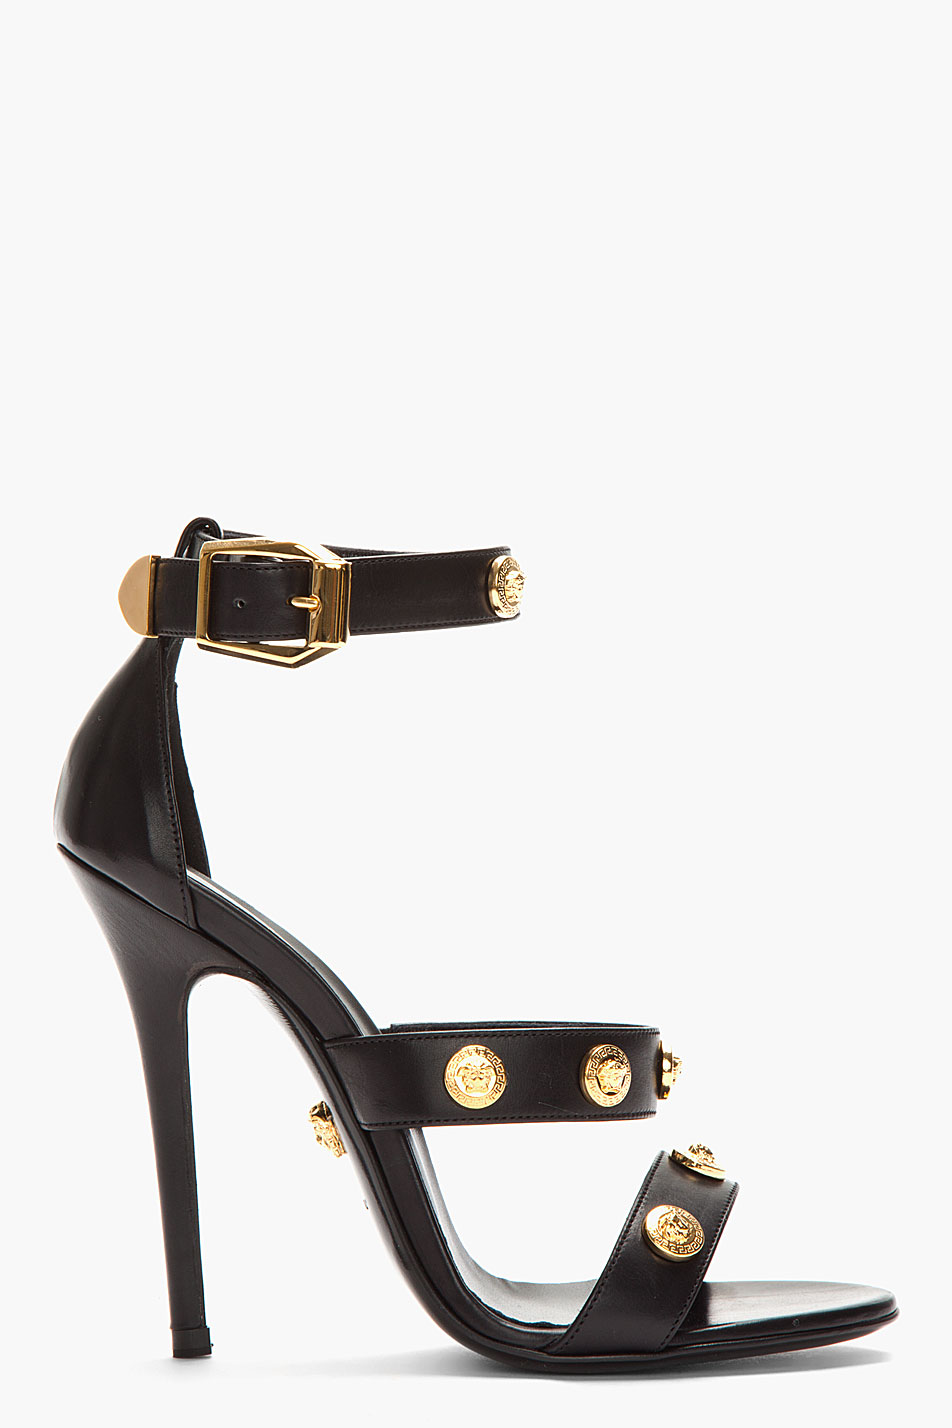 Versace Signature Medusa High Heel Sandal Black/light Gold | Lyst